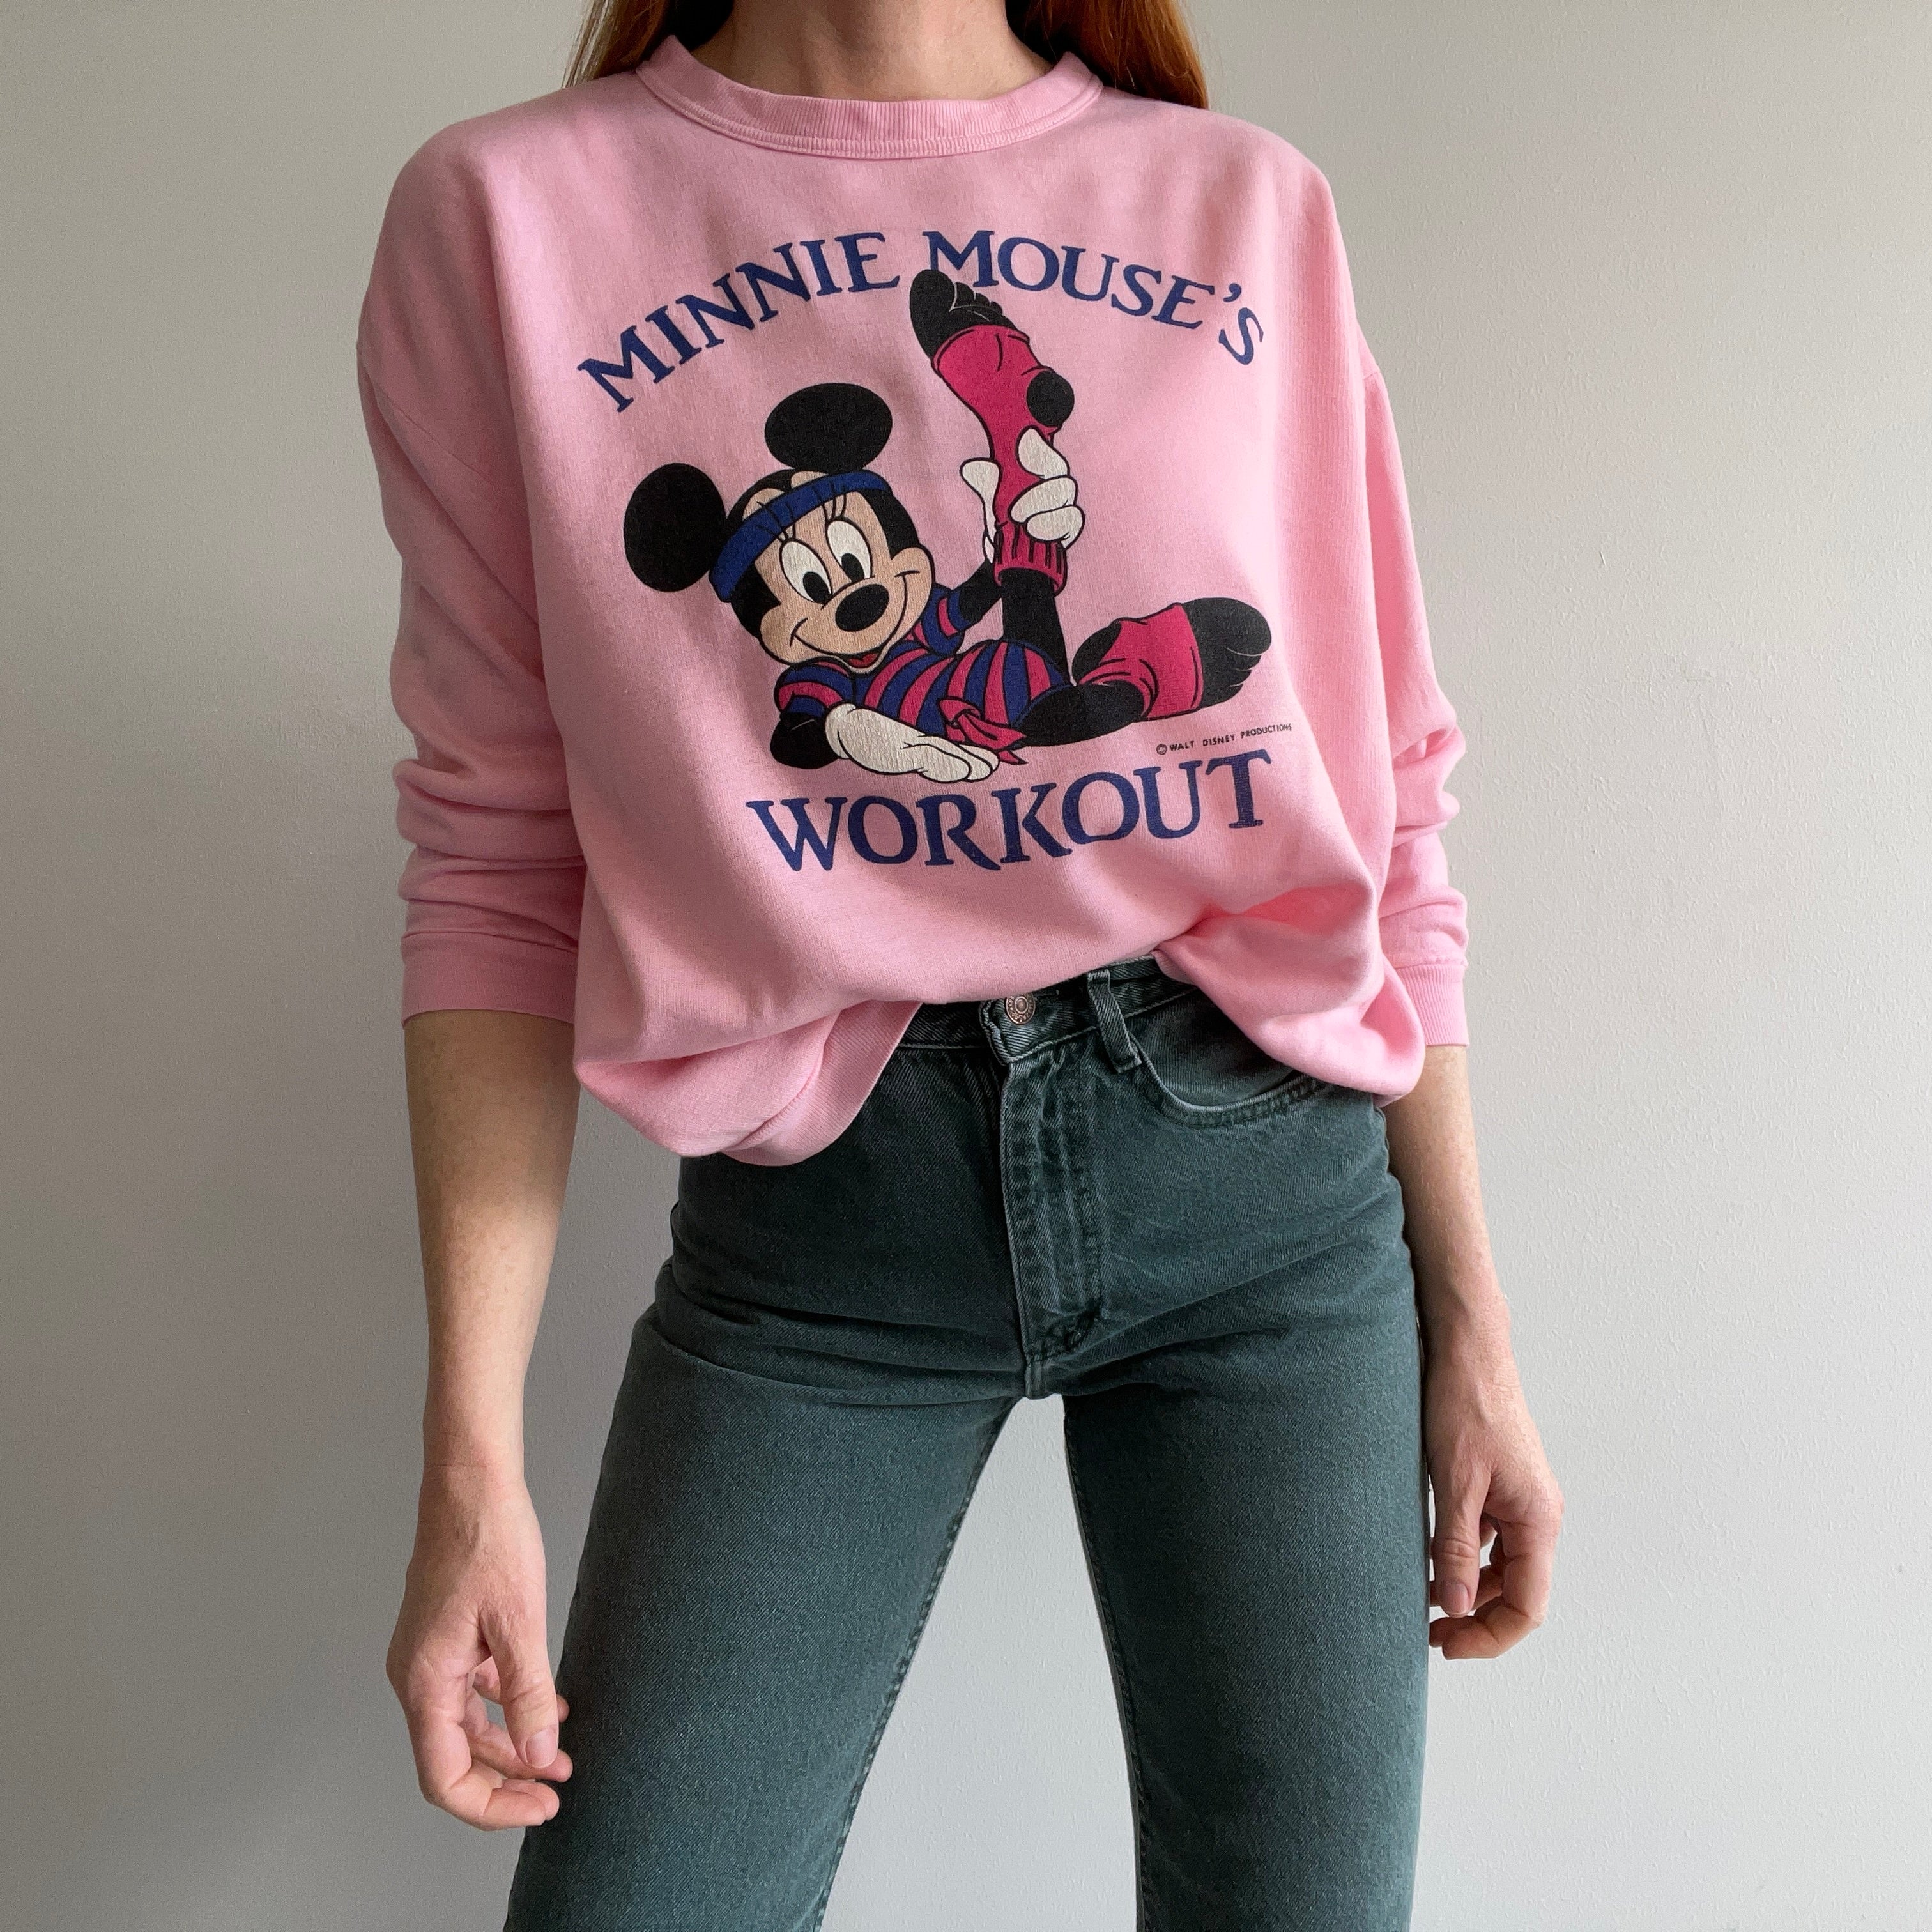 1980s Minnie Mouse's Workout Super Soft Sweatshirt